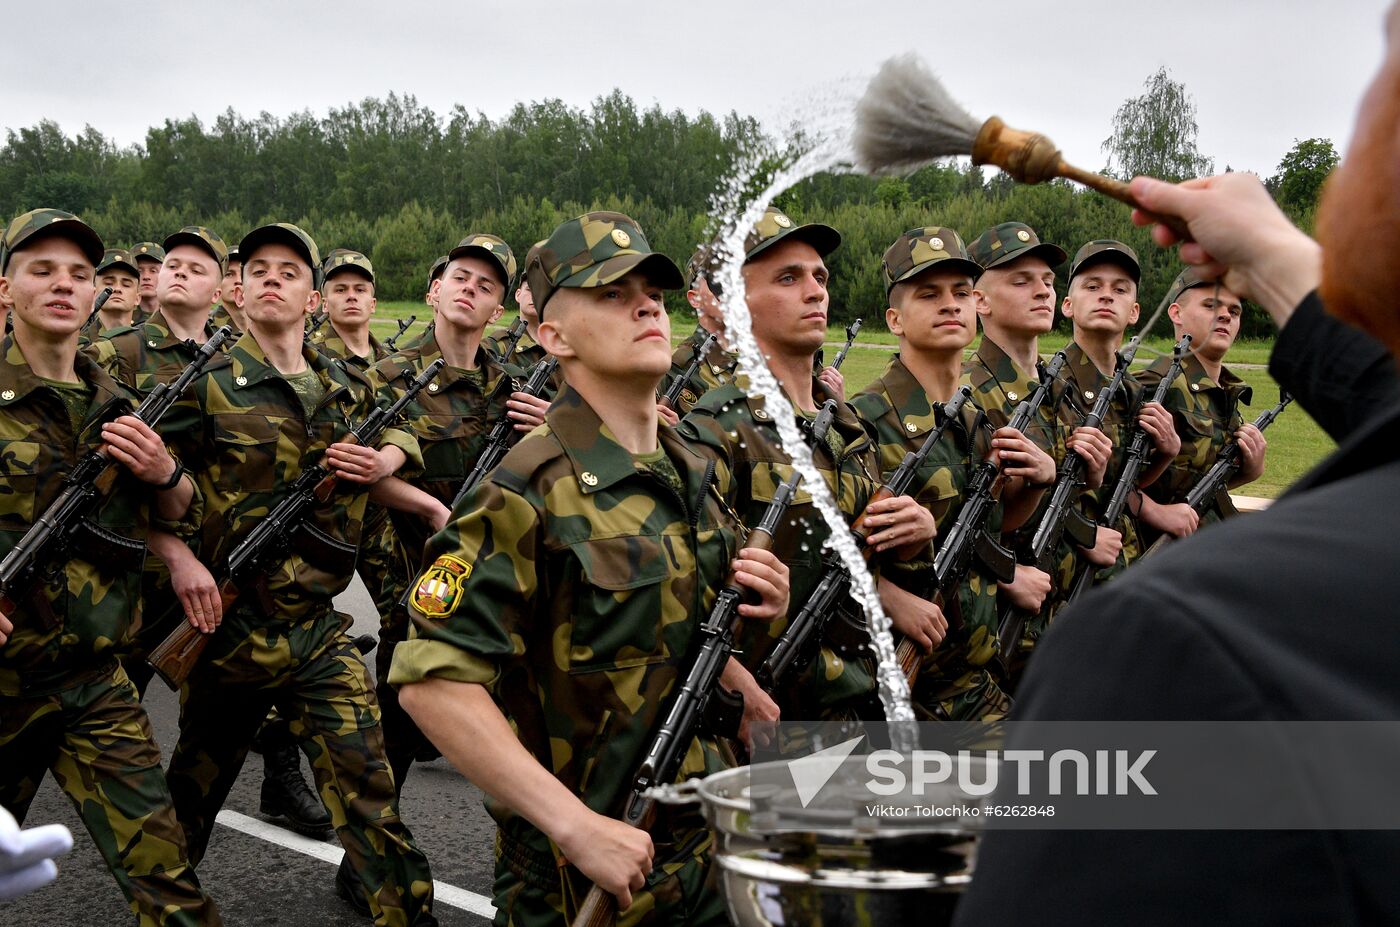 Belarus Army